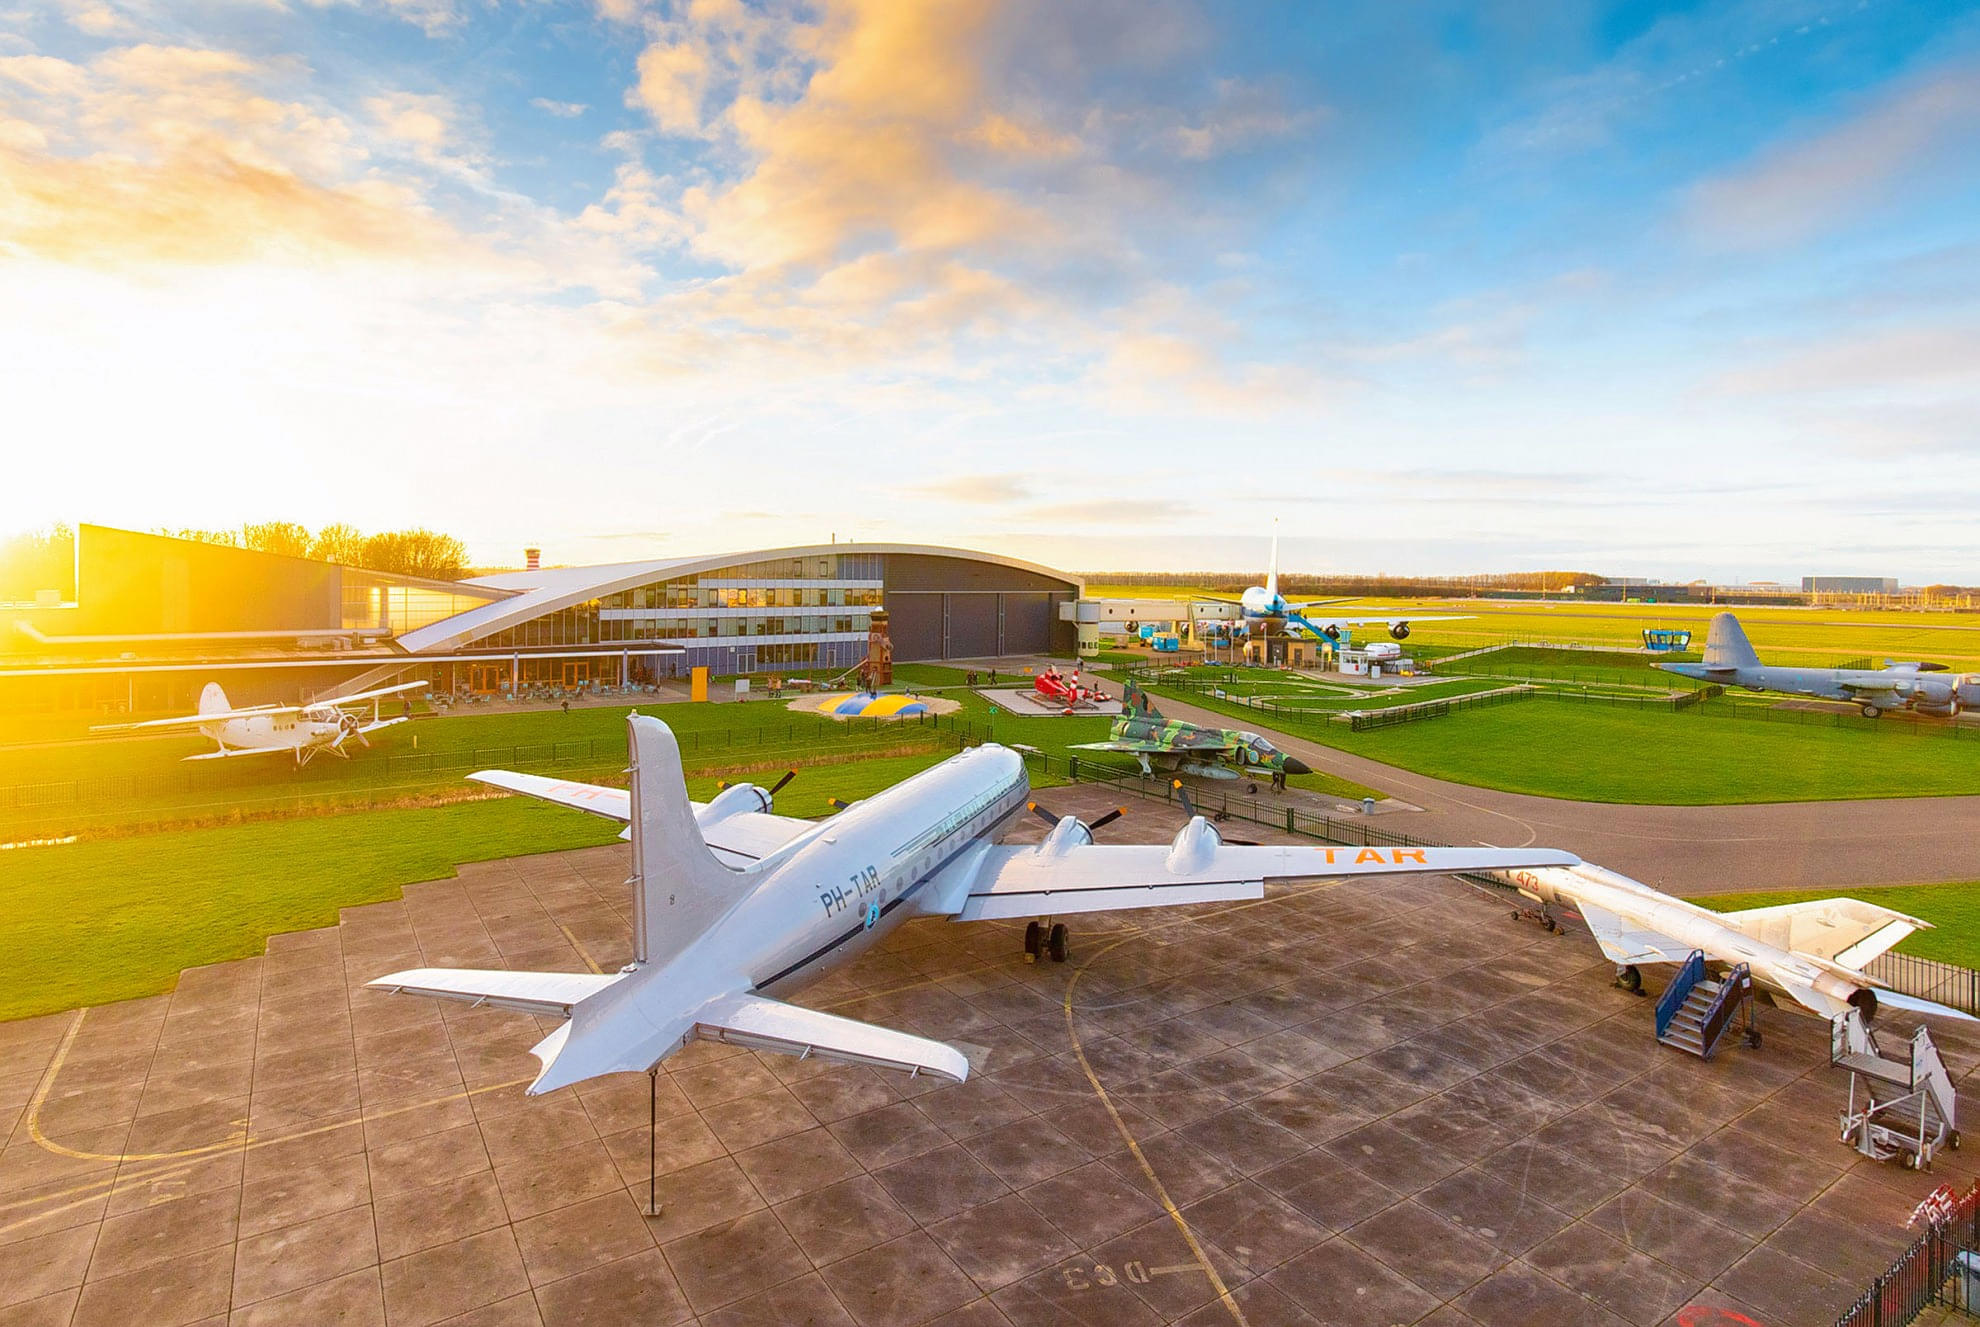 Aviodrome Aviation Theme Park Overview